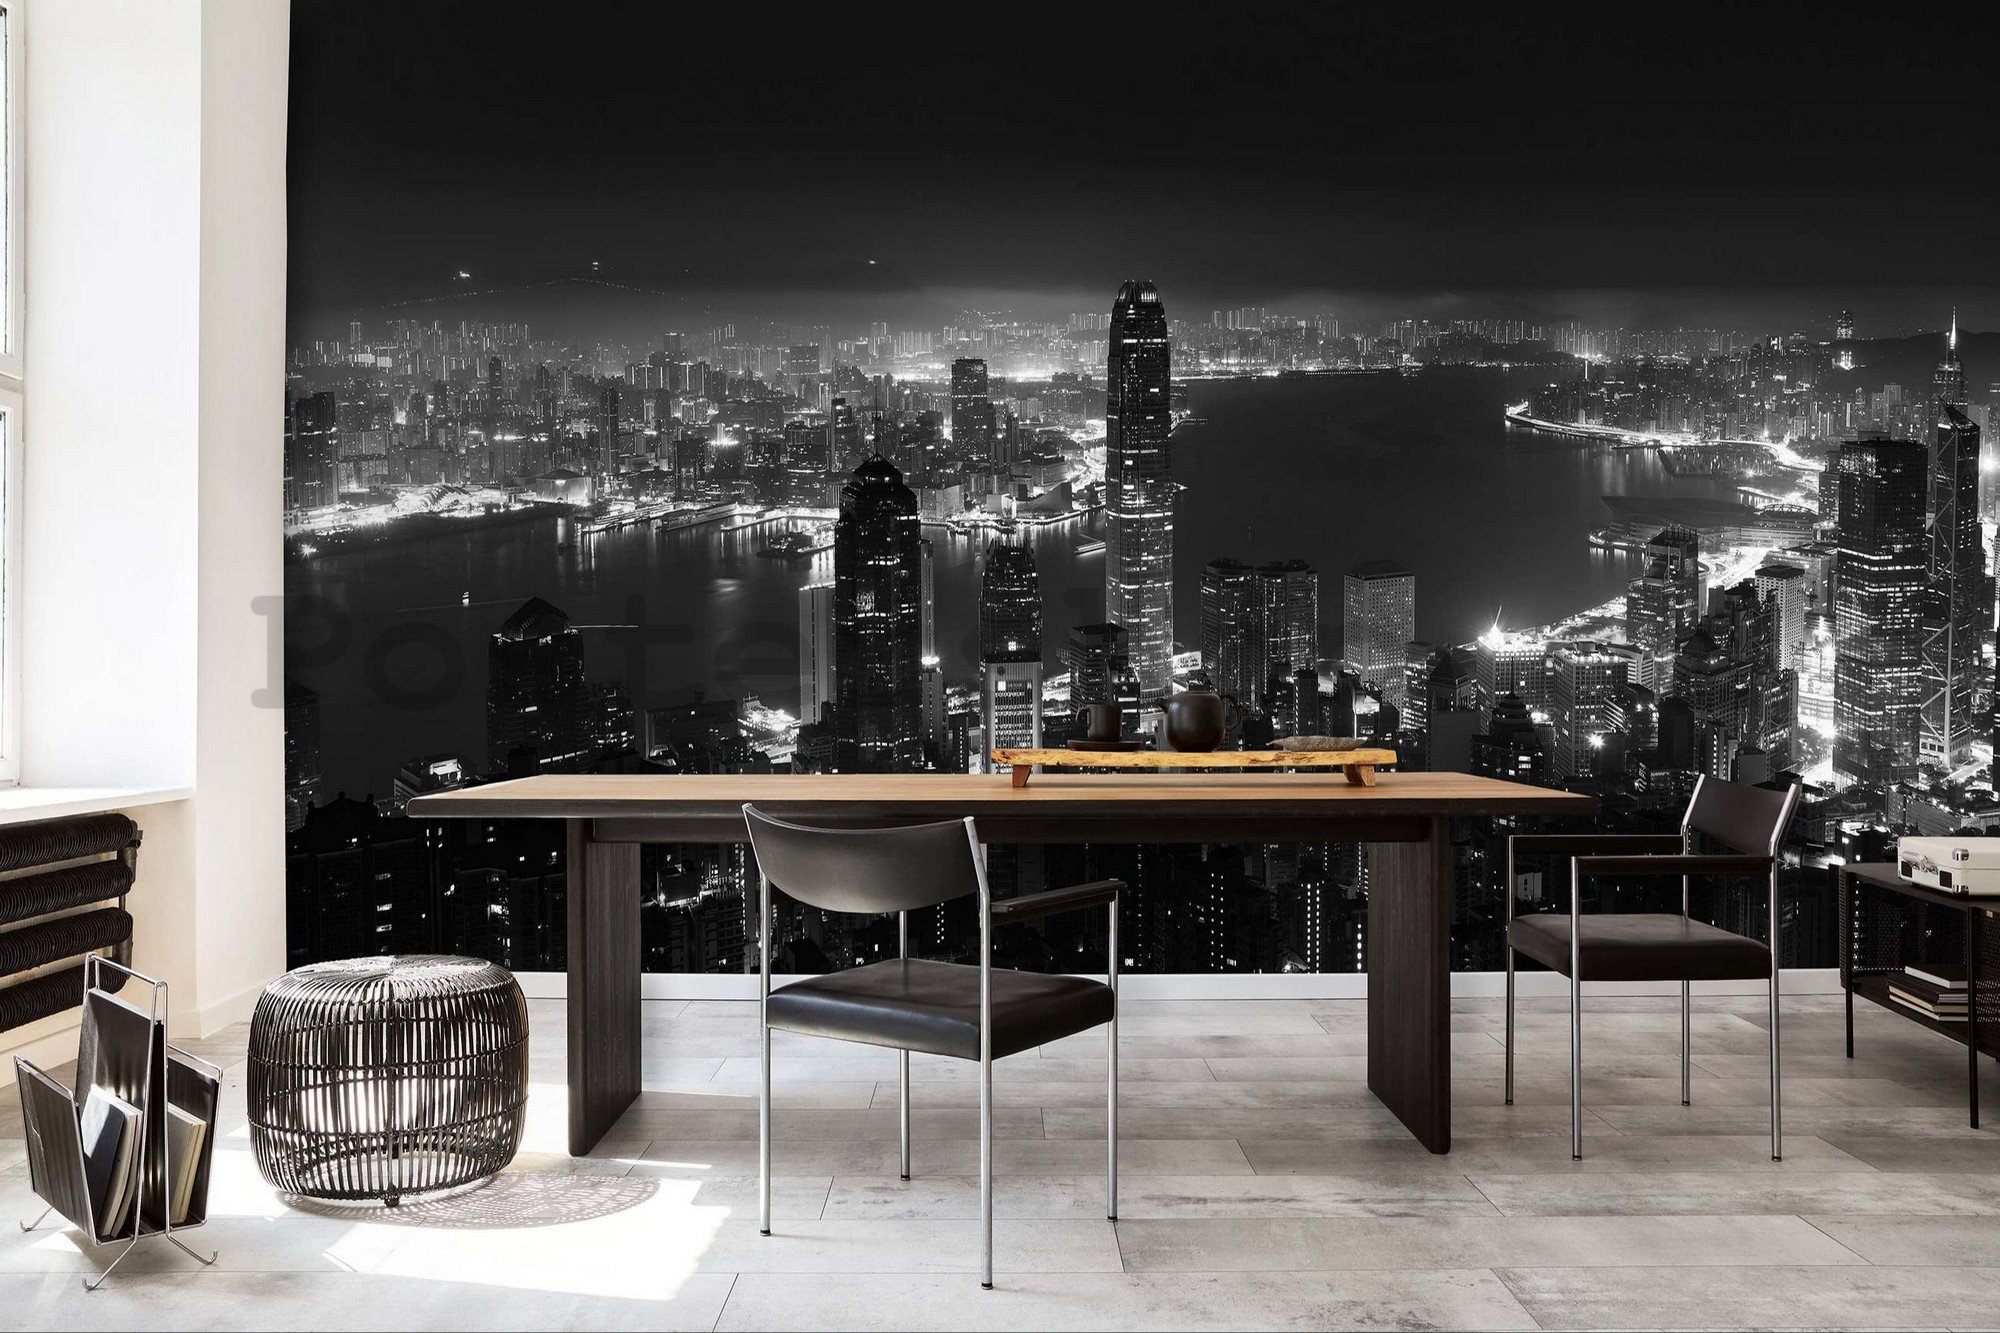 Fototapeta vliesová: Panorama velkoměsta (černobílý) - 368x254 cm